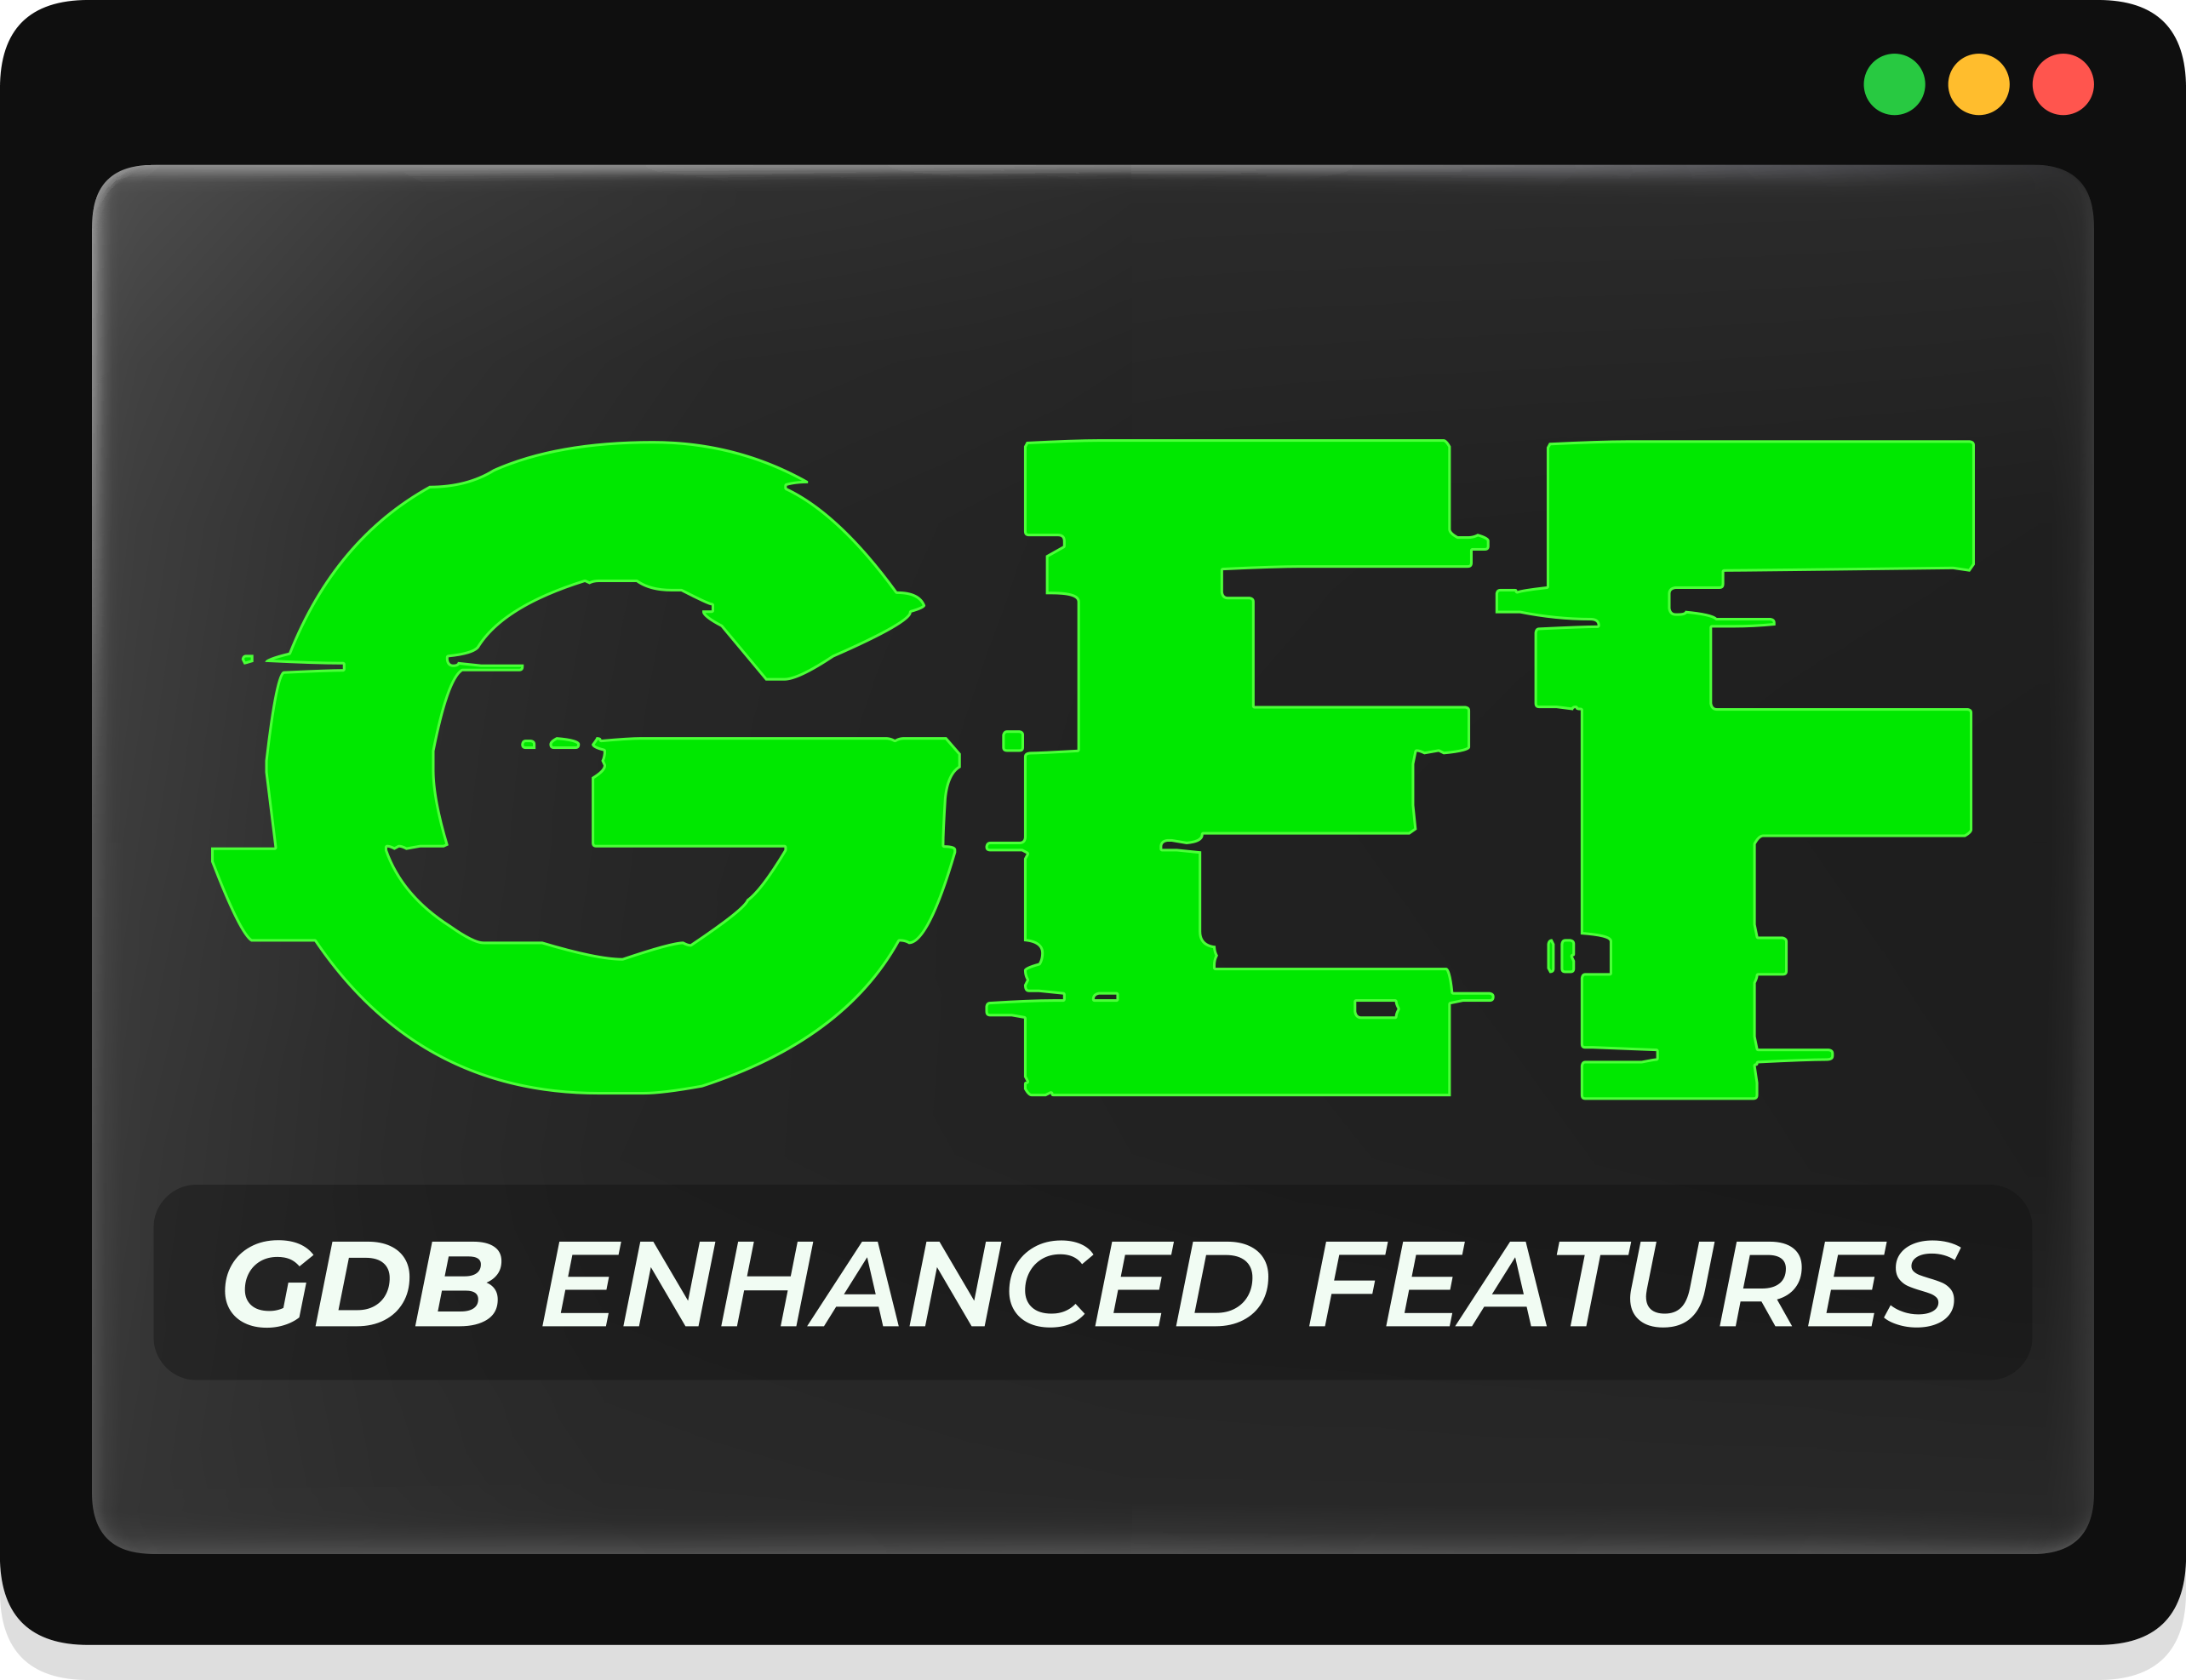 GDB Enhanced Features (a.k.a. GEF)